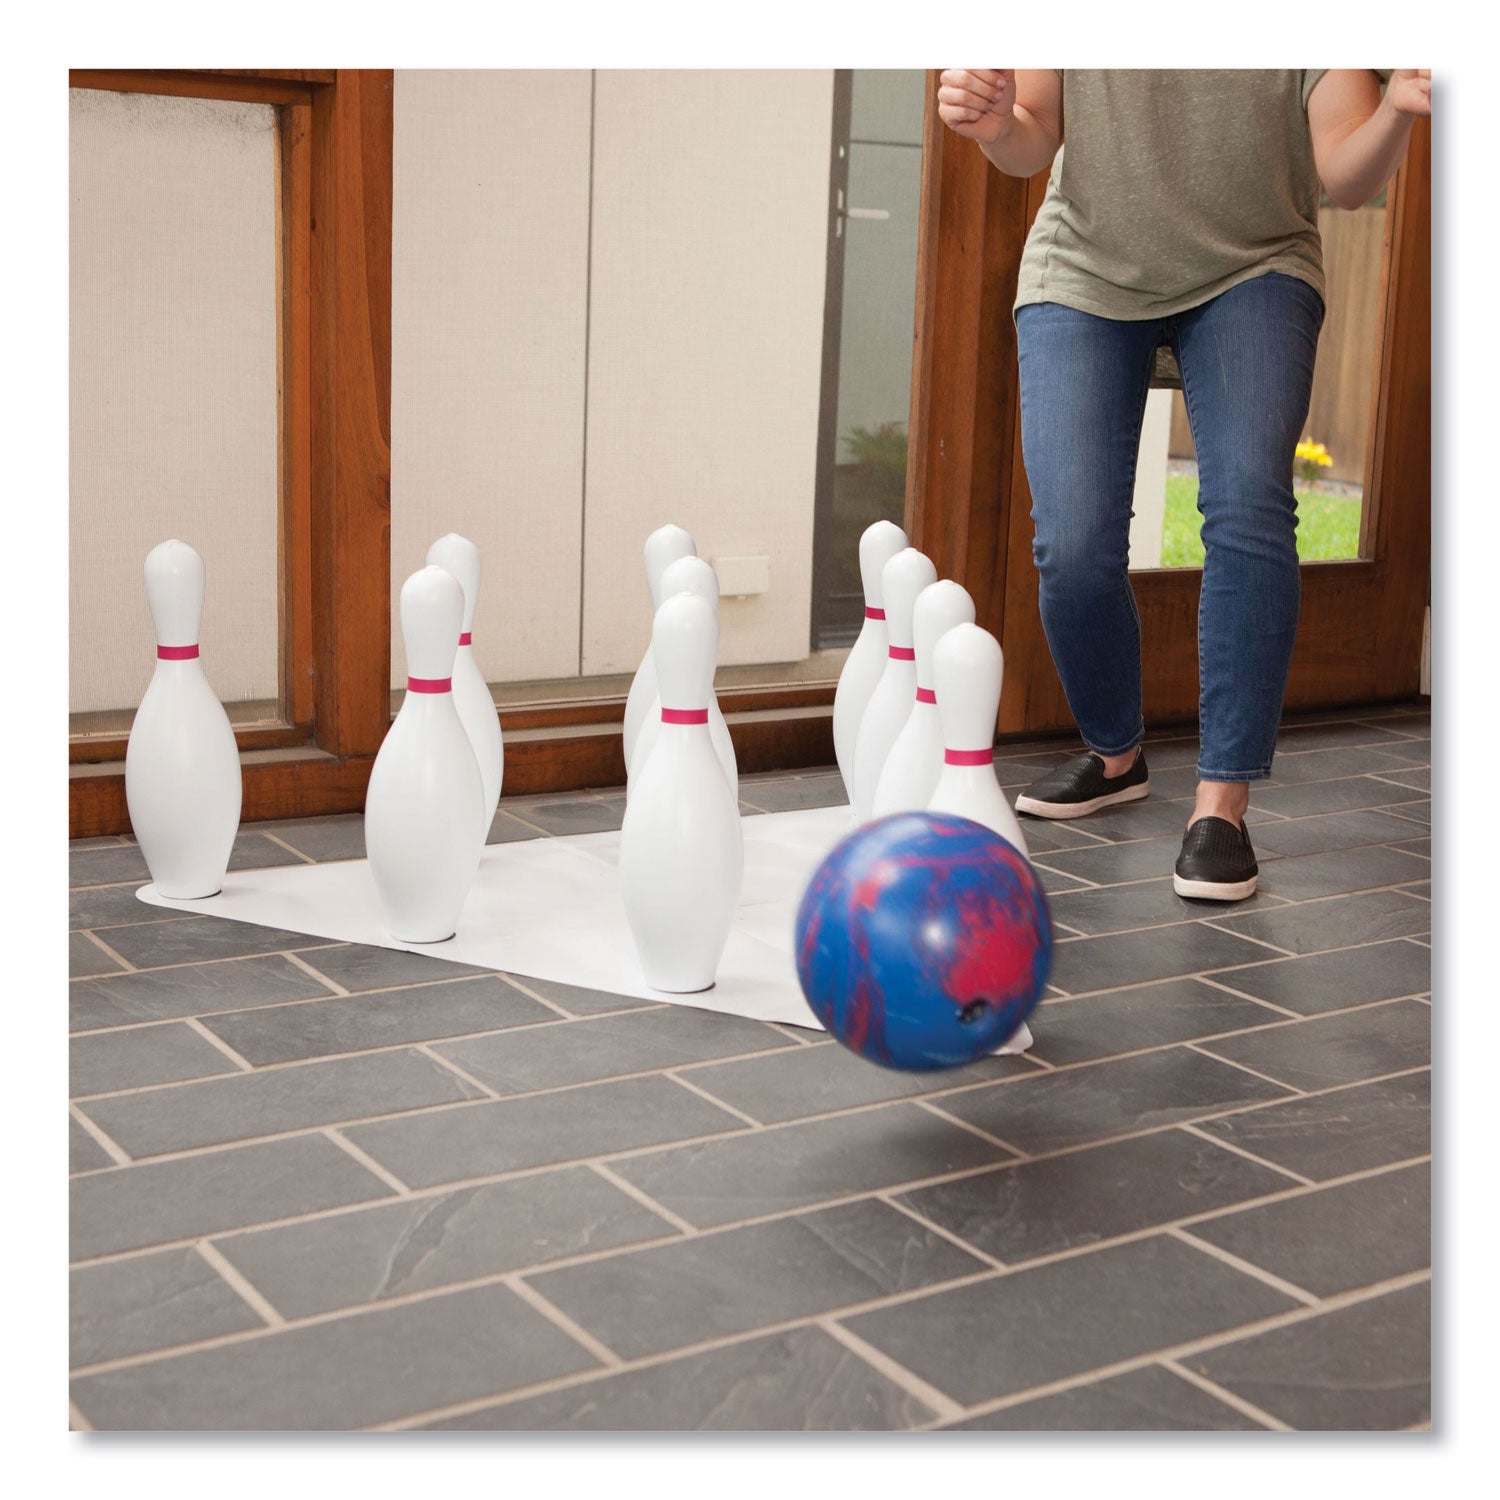 Bowling Set, Plastic/Rubber, White, 10 Bowling Pins, 1 Bowling Ball - 